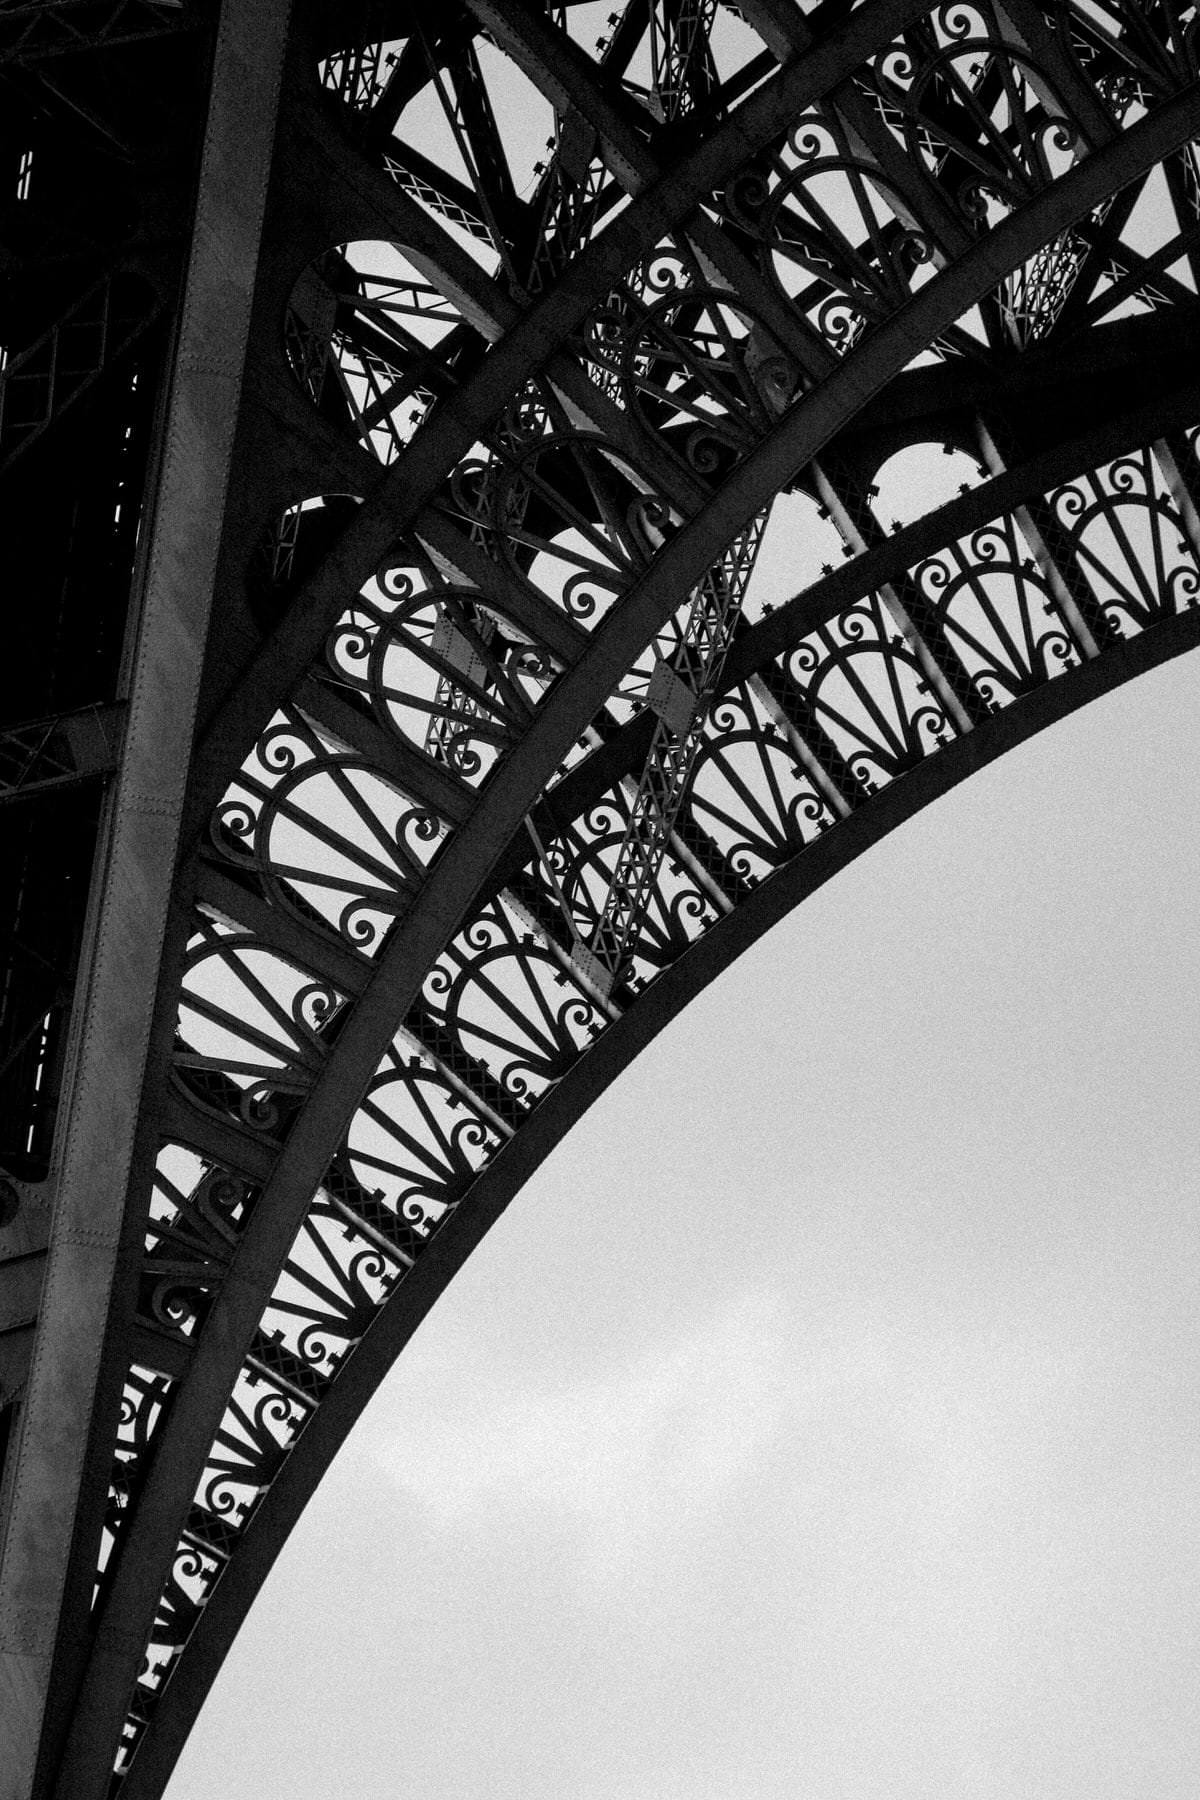 Eiffel-Tower-Paris-France-black-and-white-fine-art-photography-by-Studio-L-photographer-Laura-Schneider-_4630